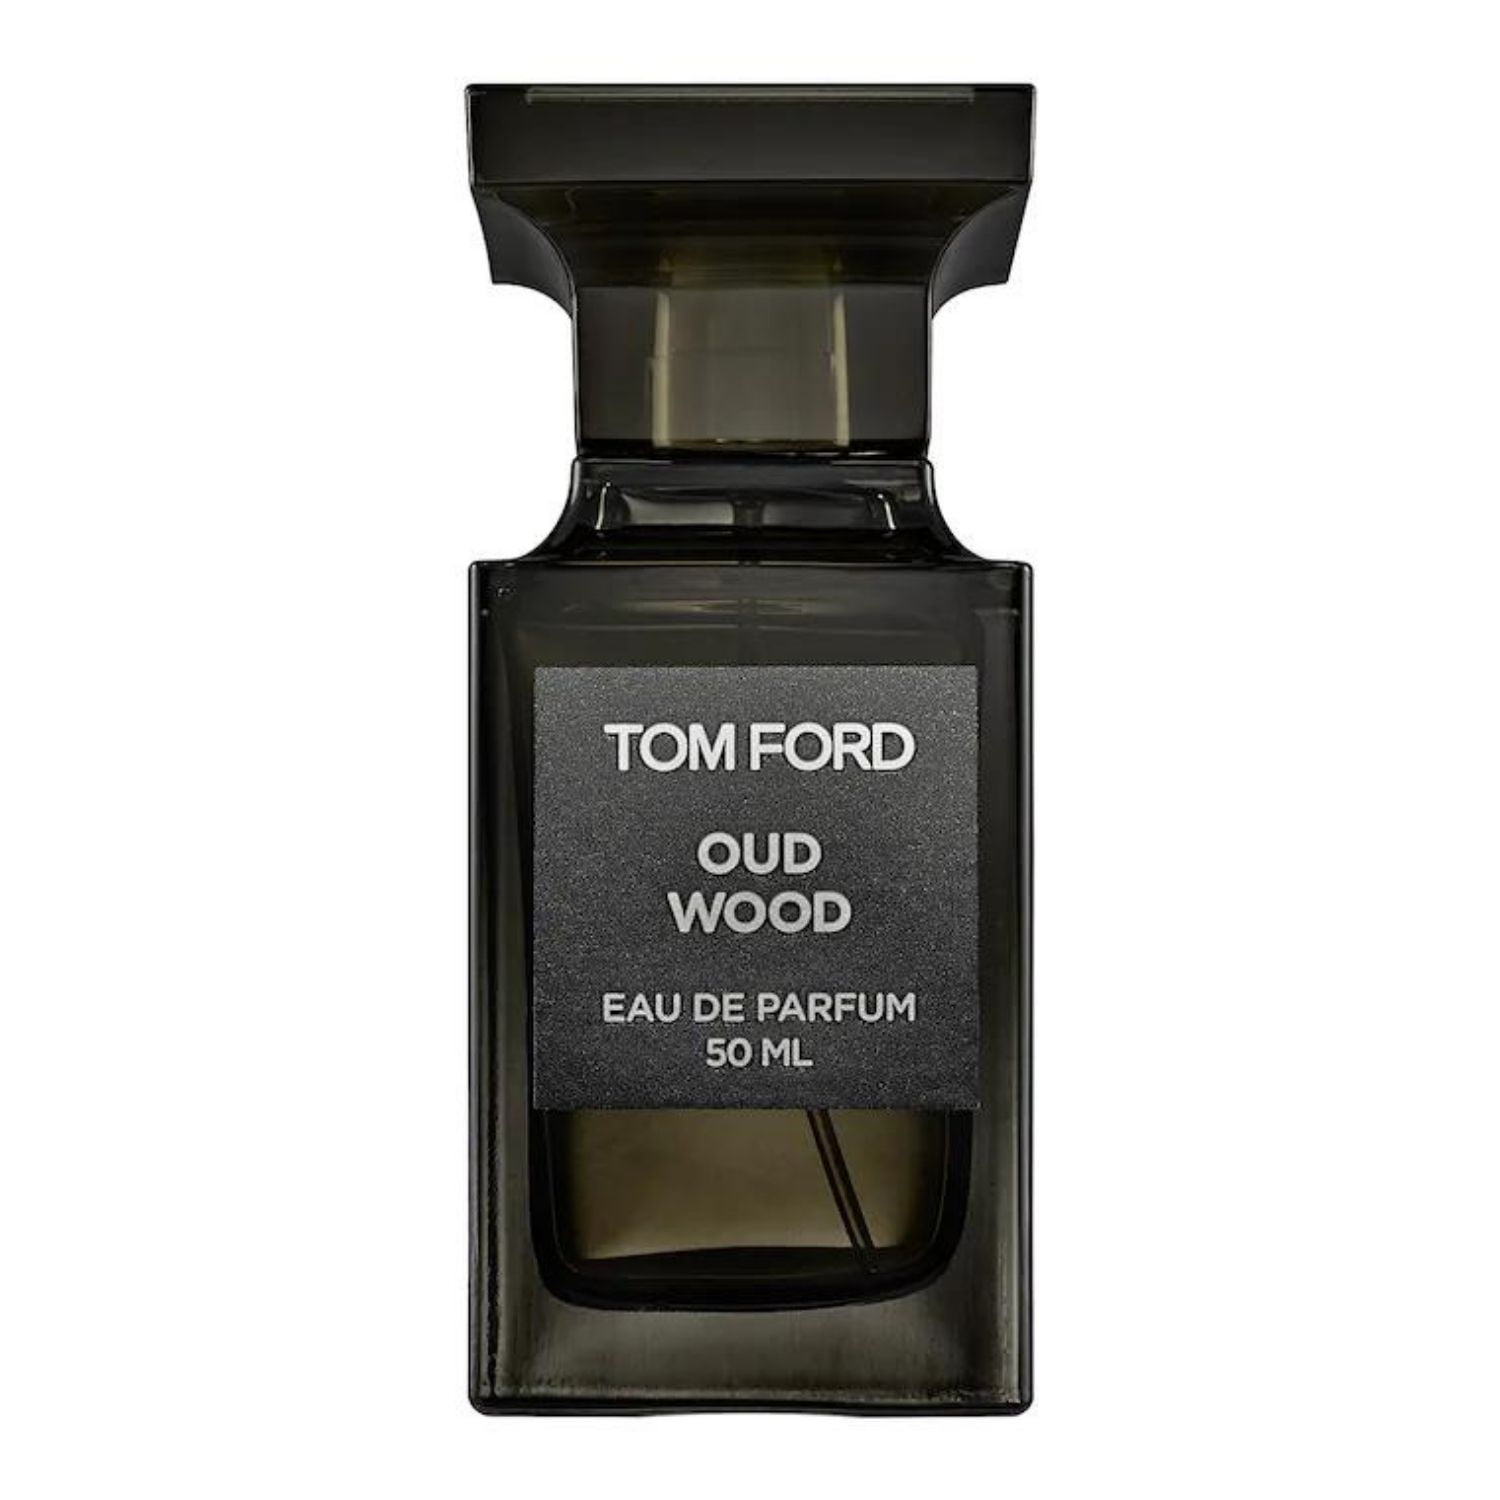 Tom Ford Unisex Oud Wood EDP Spray 1.7 oz (50 ml) - Walmart.com